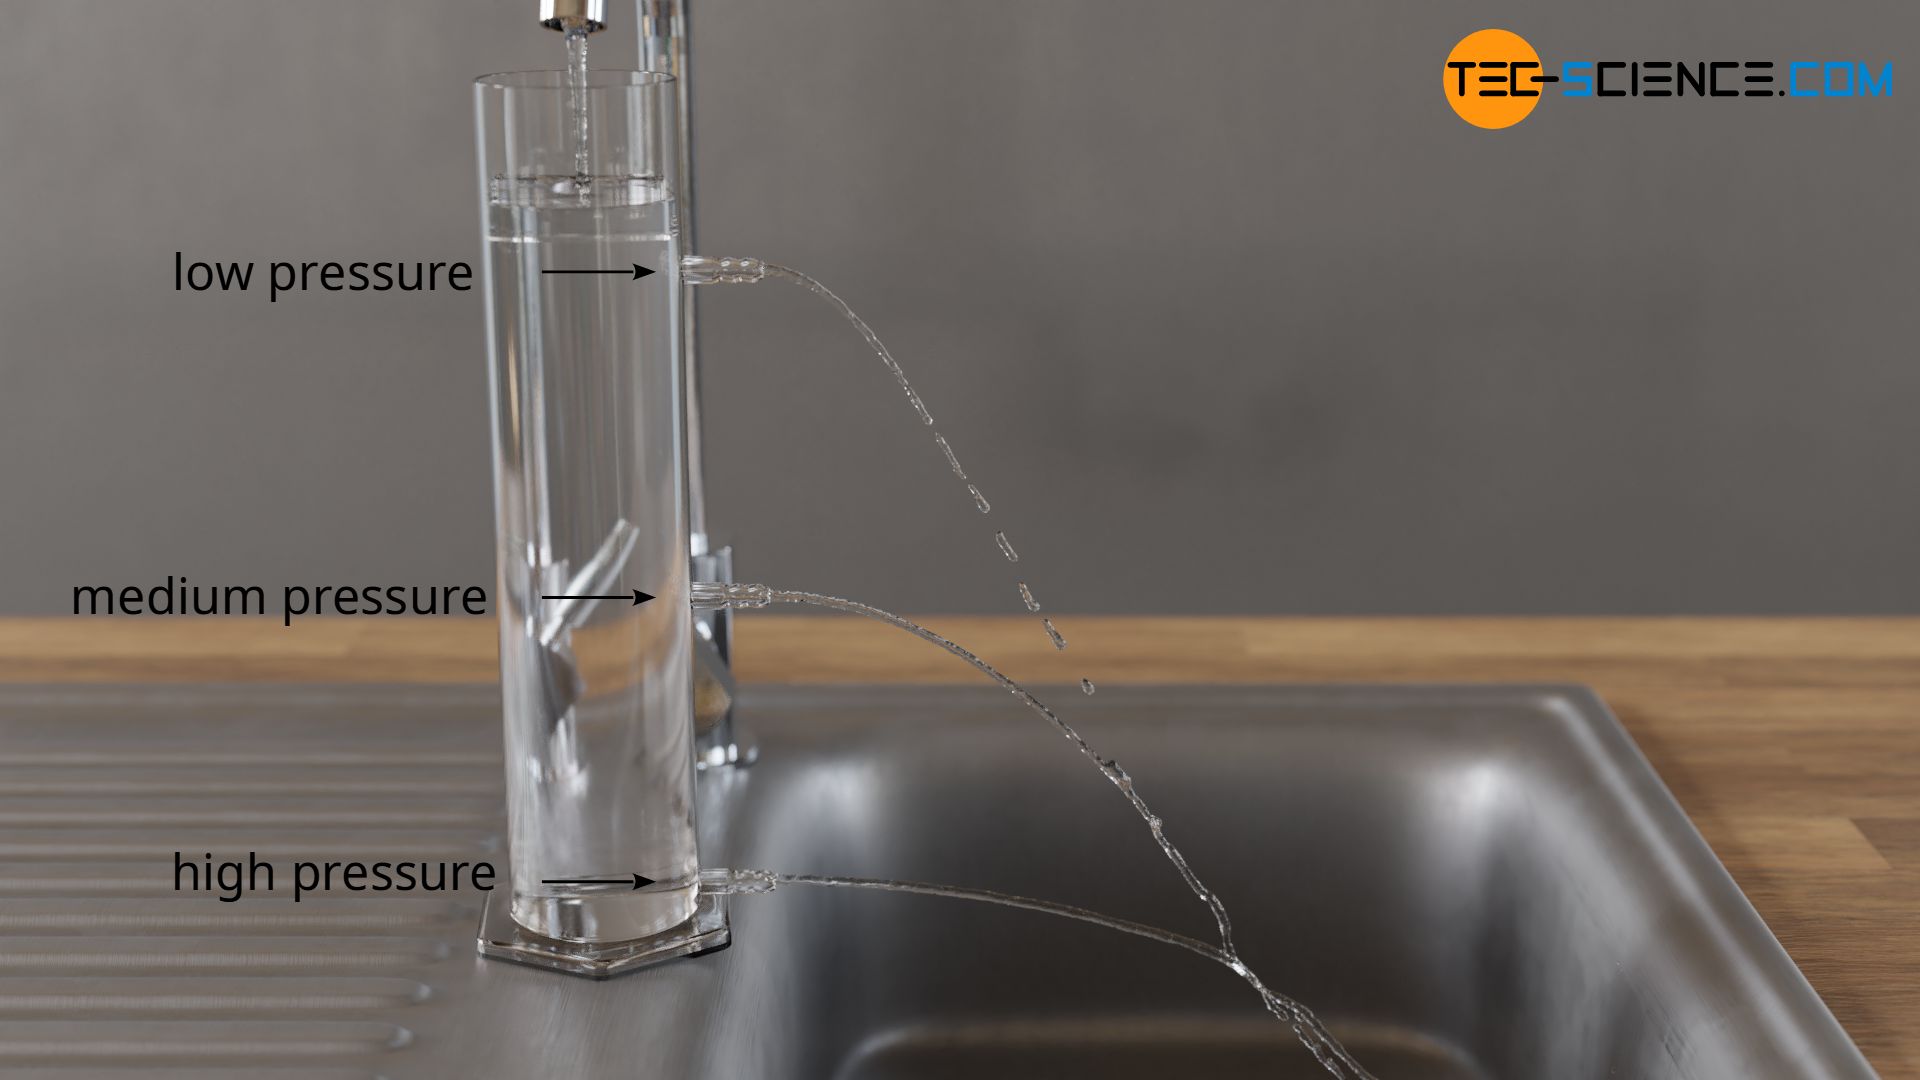 Demonstration of the increasing hydrostatic water pressure with increasing depth